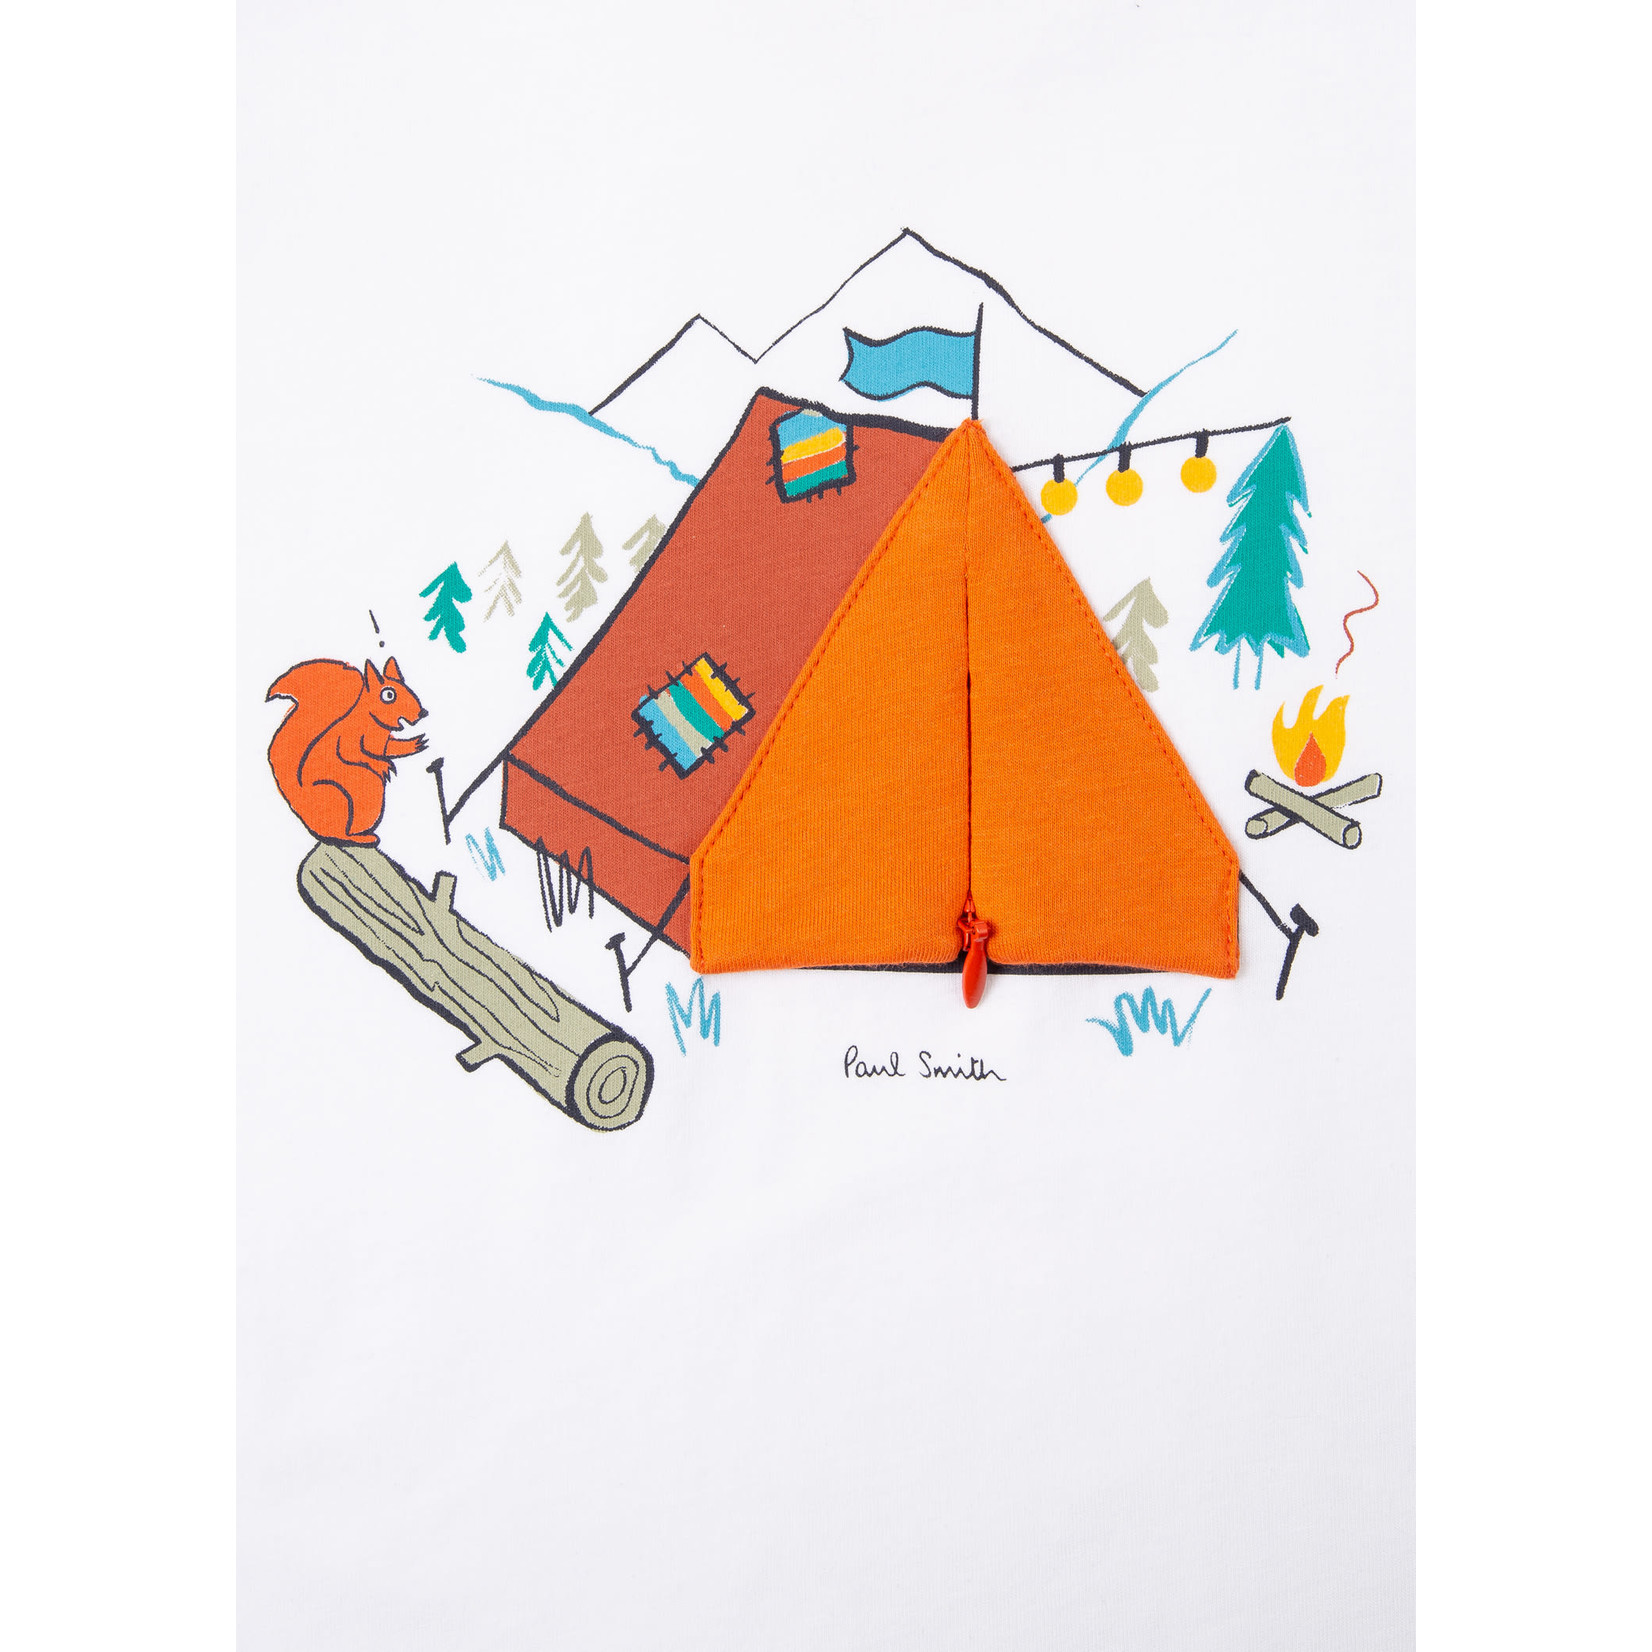 Paul Smith Paul Smith - camping print T-shirt